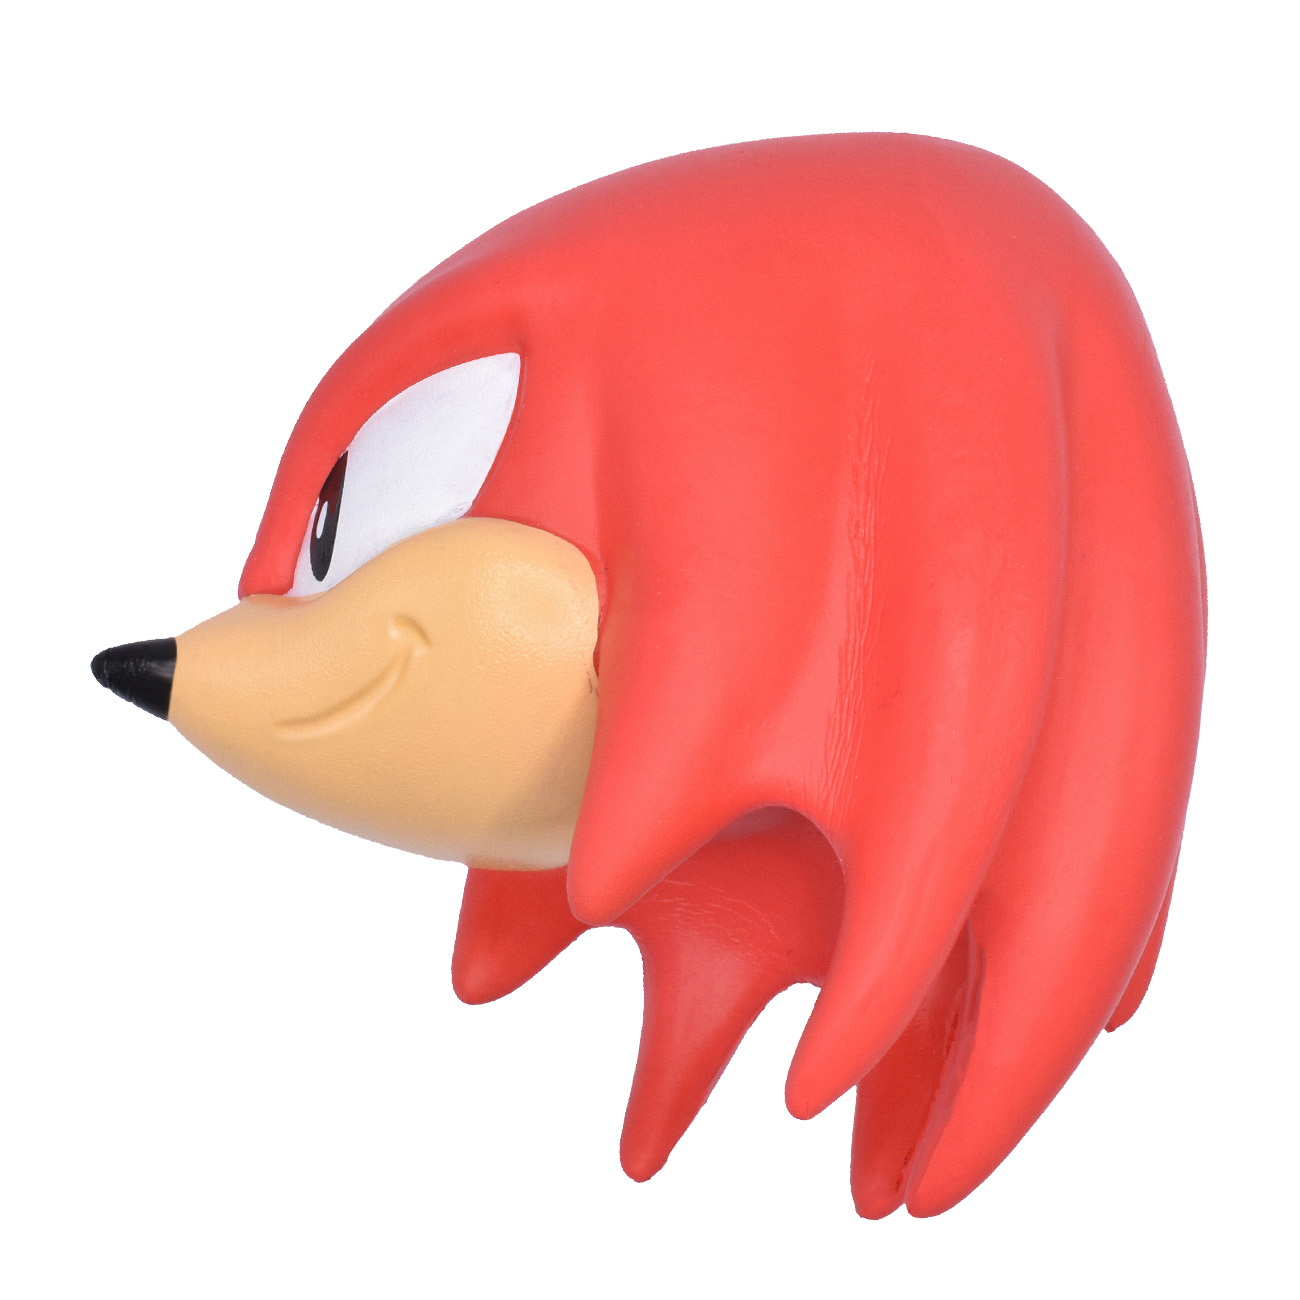 Sonic Mega SquishMe - Knuckles